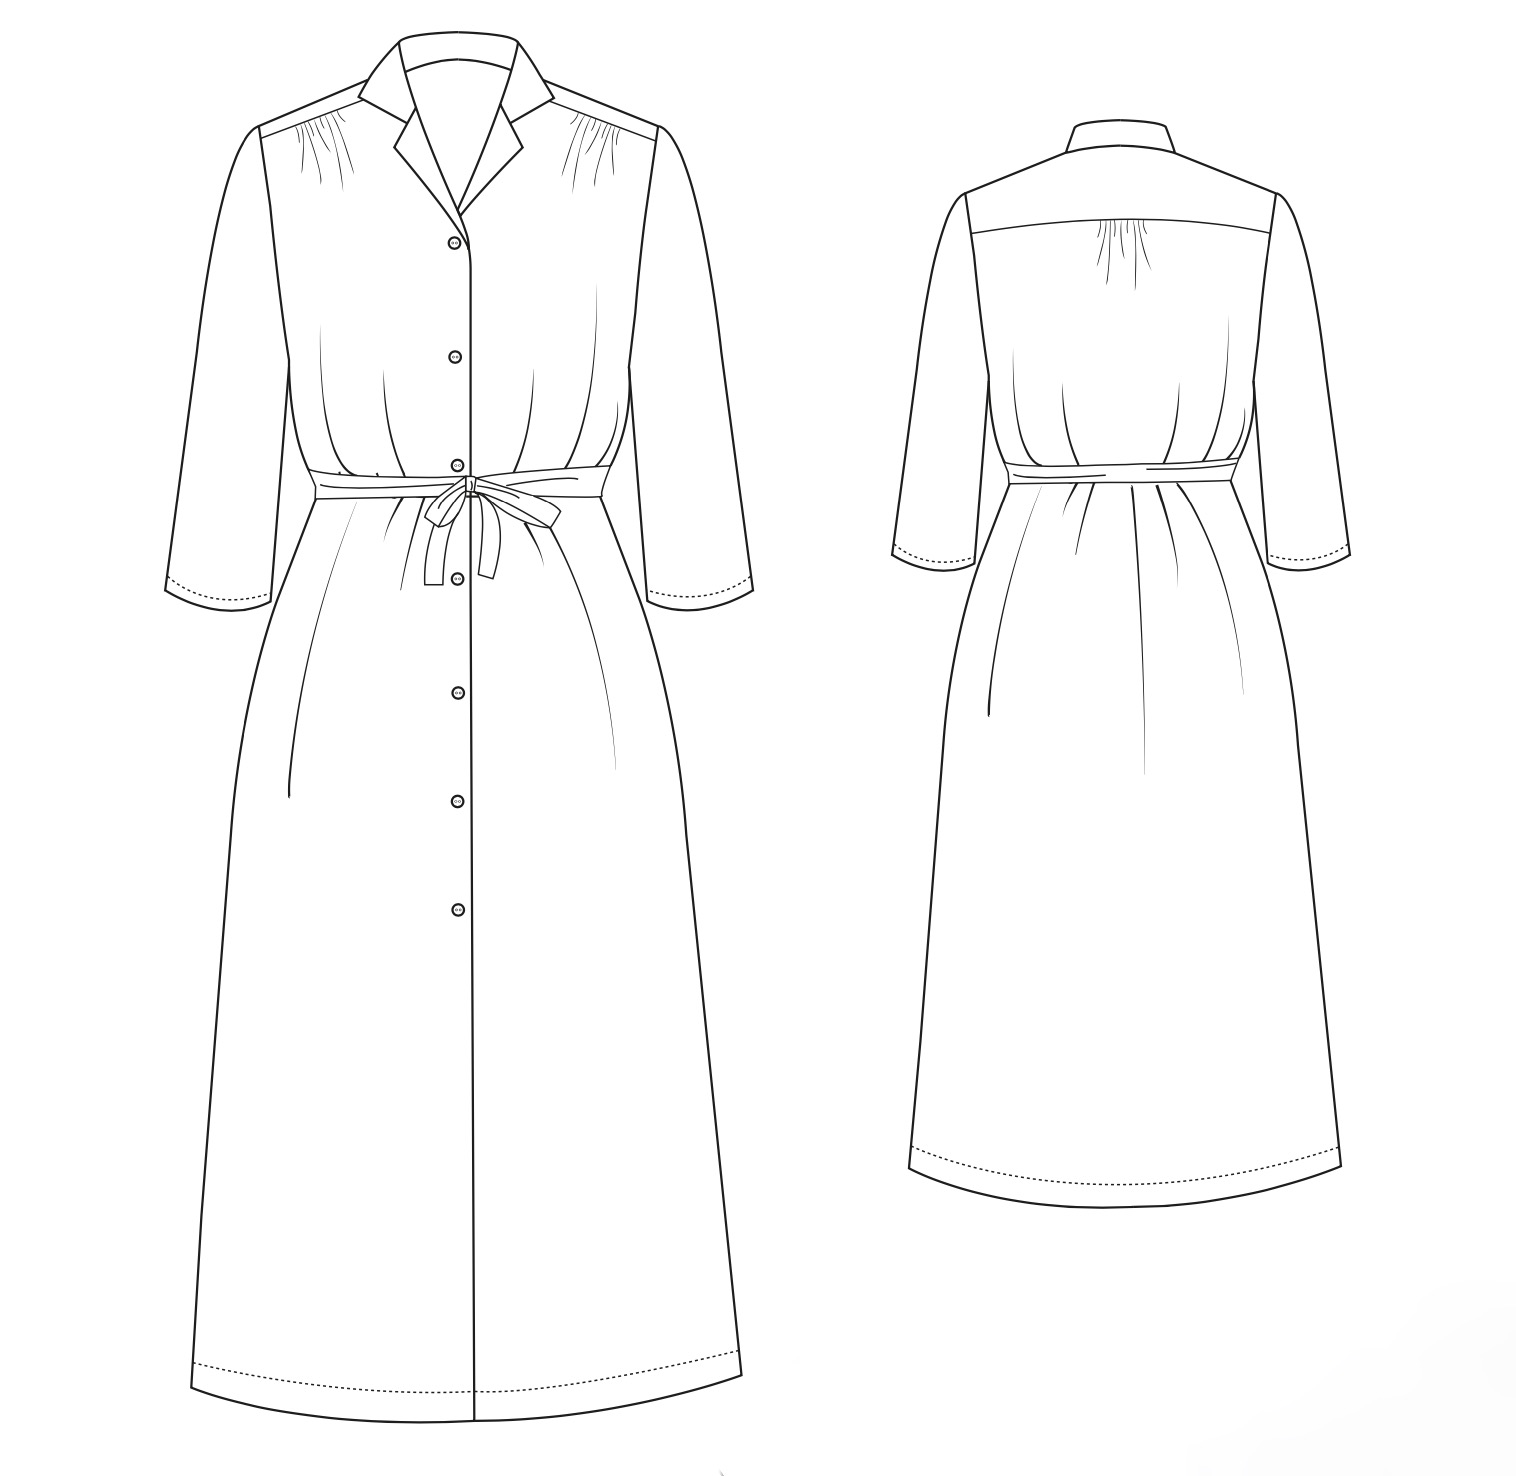 The Modern Sewing Co. Celia Dress - The Fold Line